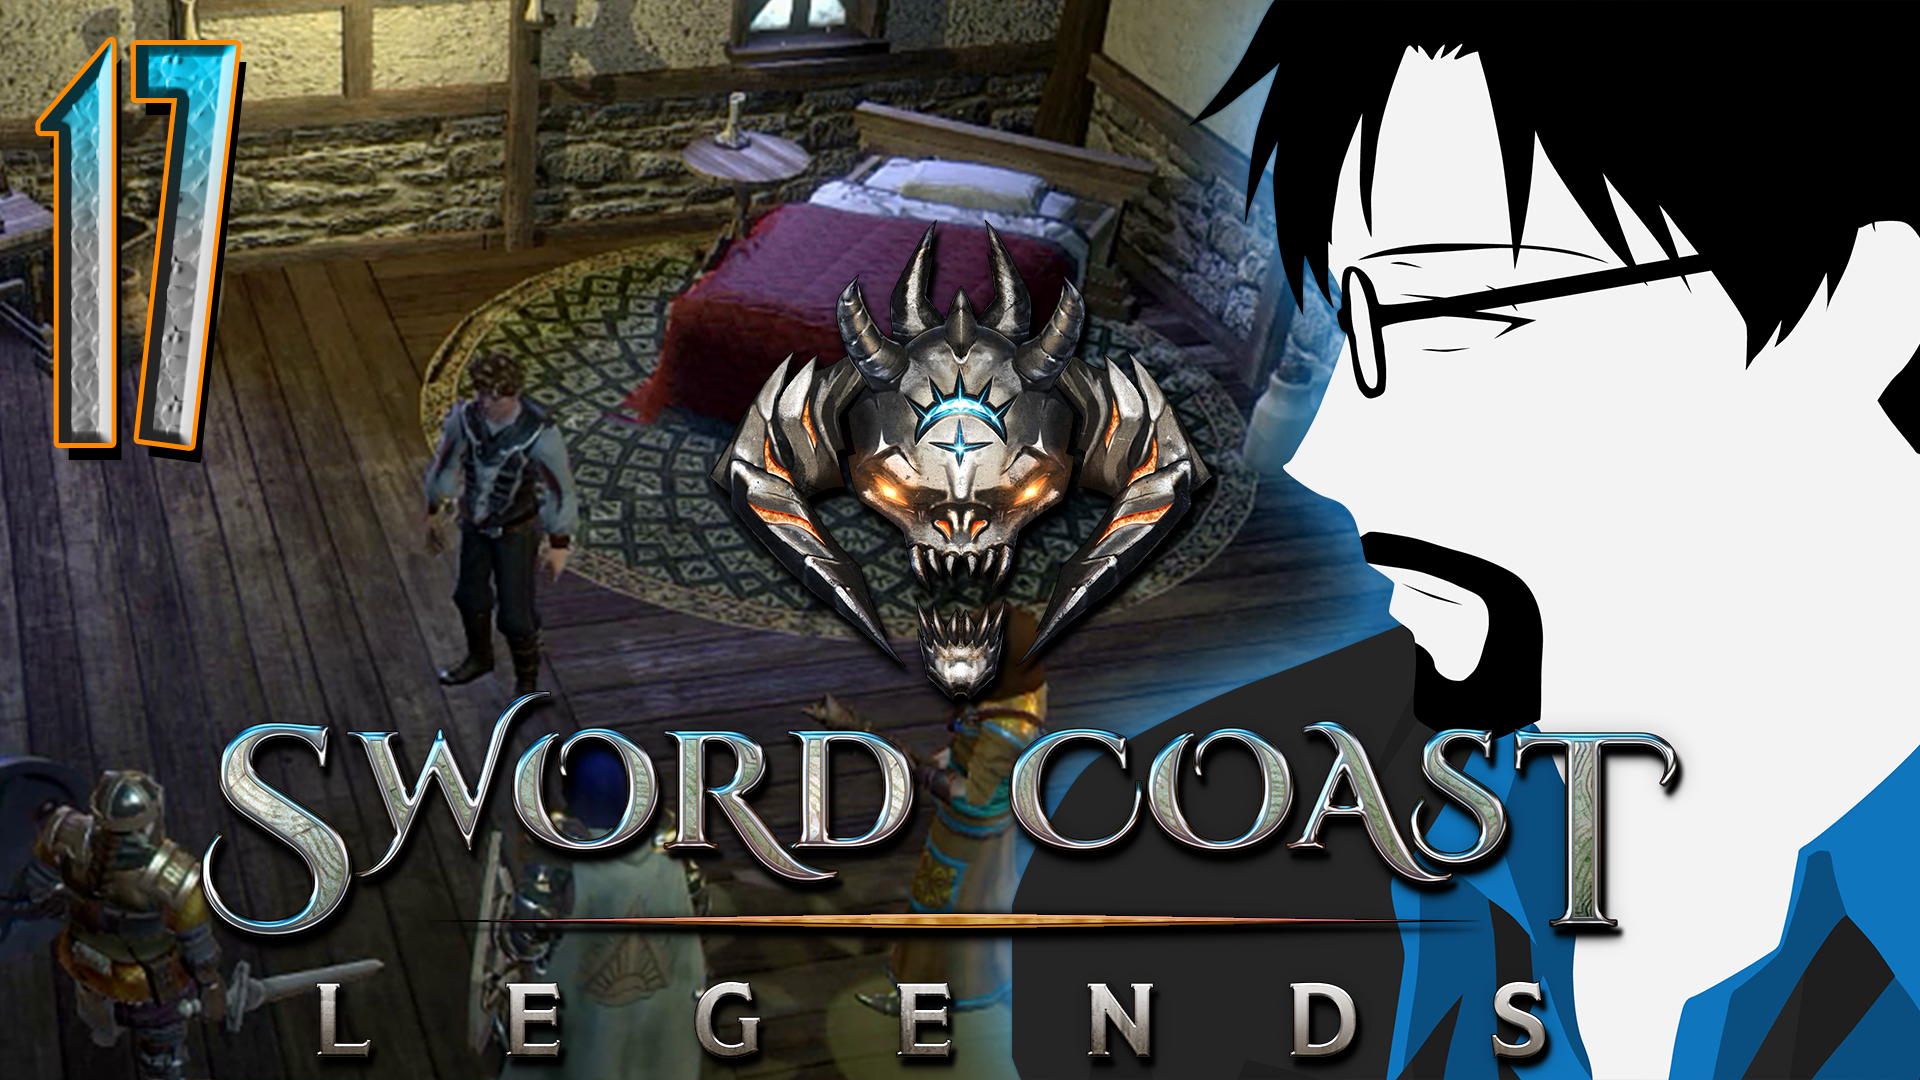 Sword Coast Legends: The art of interrogation – PART 17 [RtG]